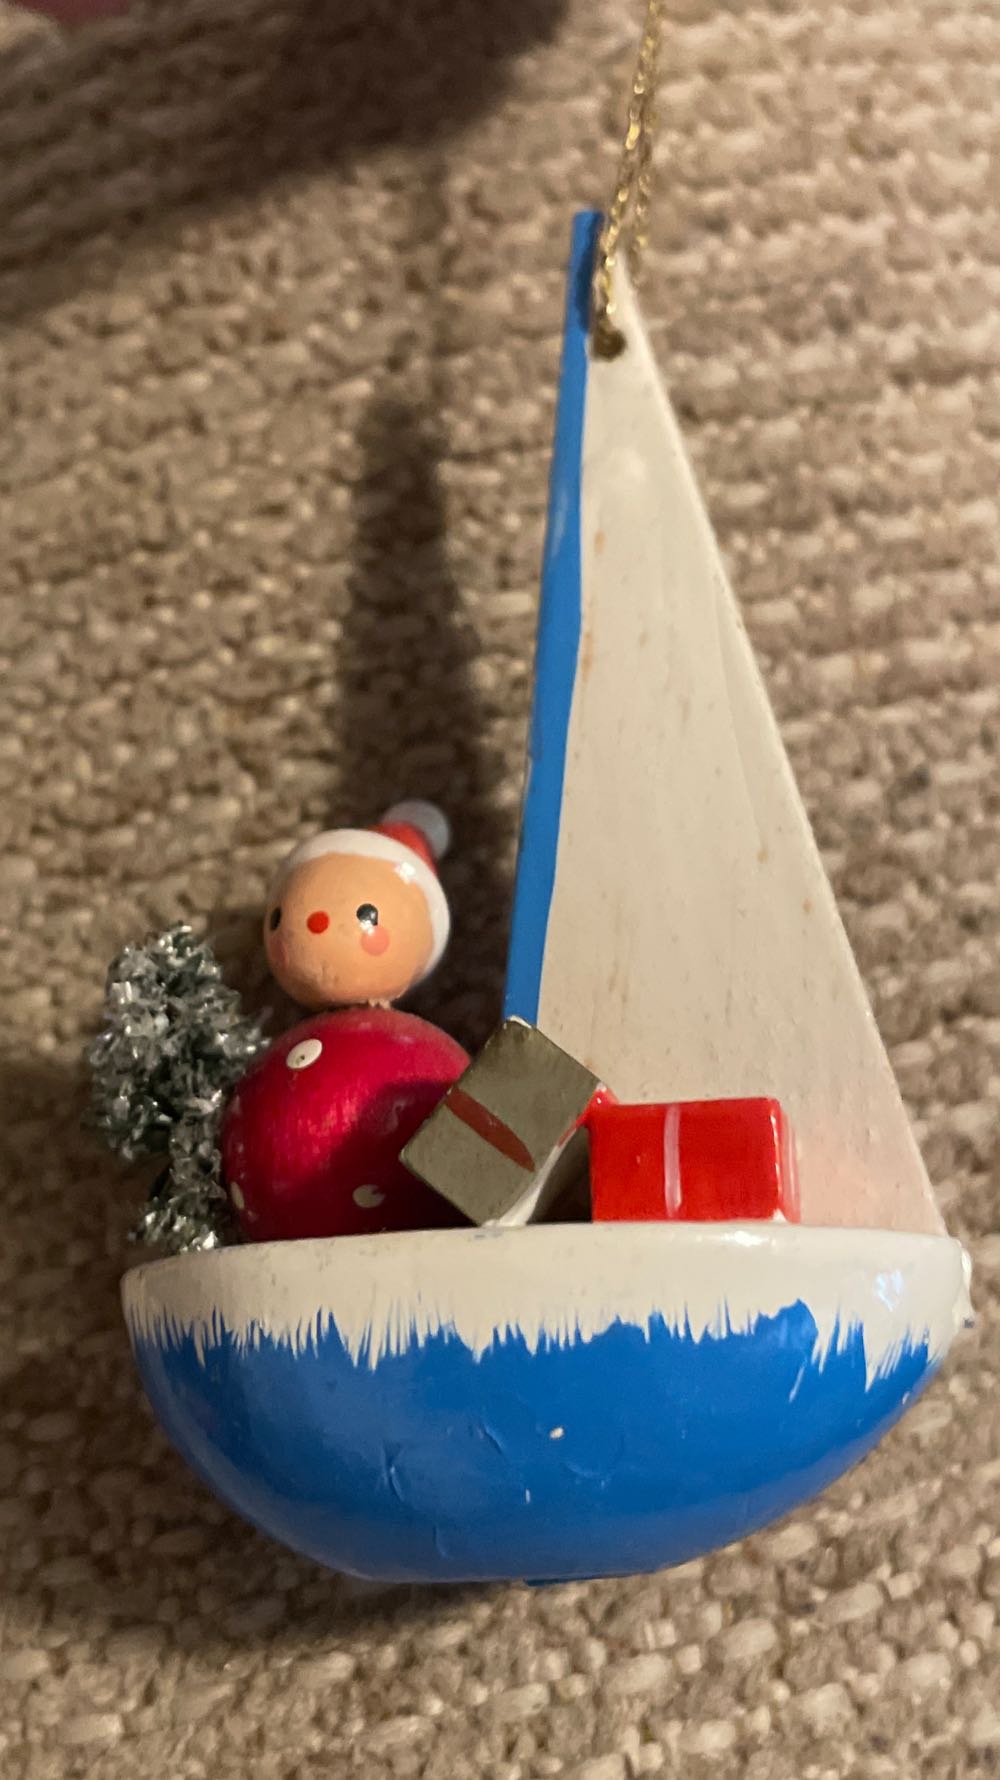 Wood - Sailboat - Christmas - Transportation ornament collectible - Main Image 1